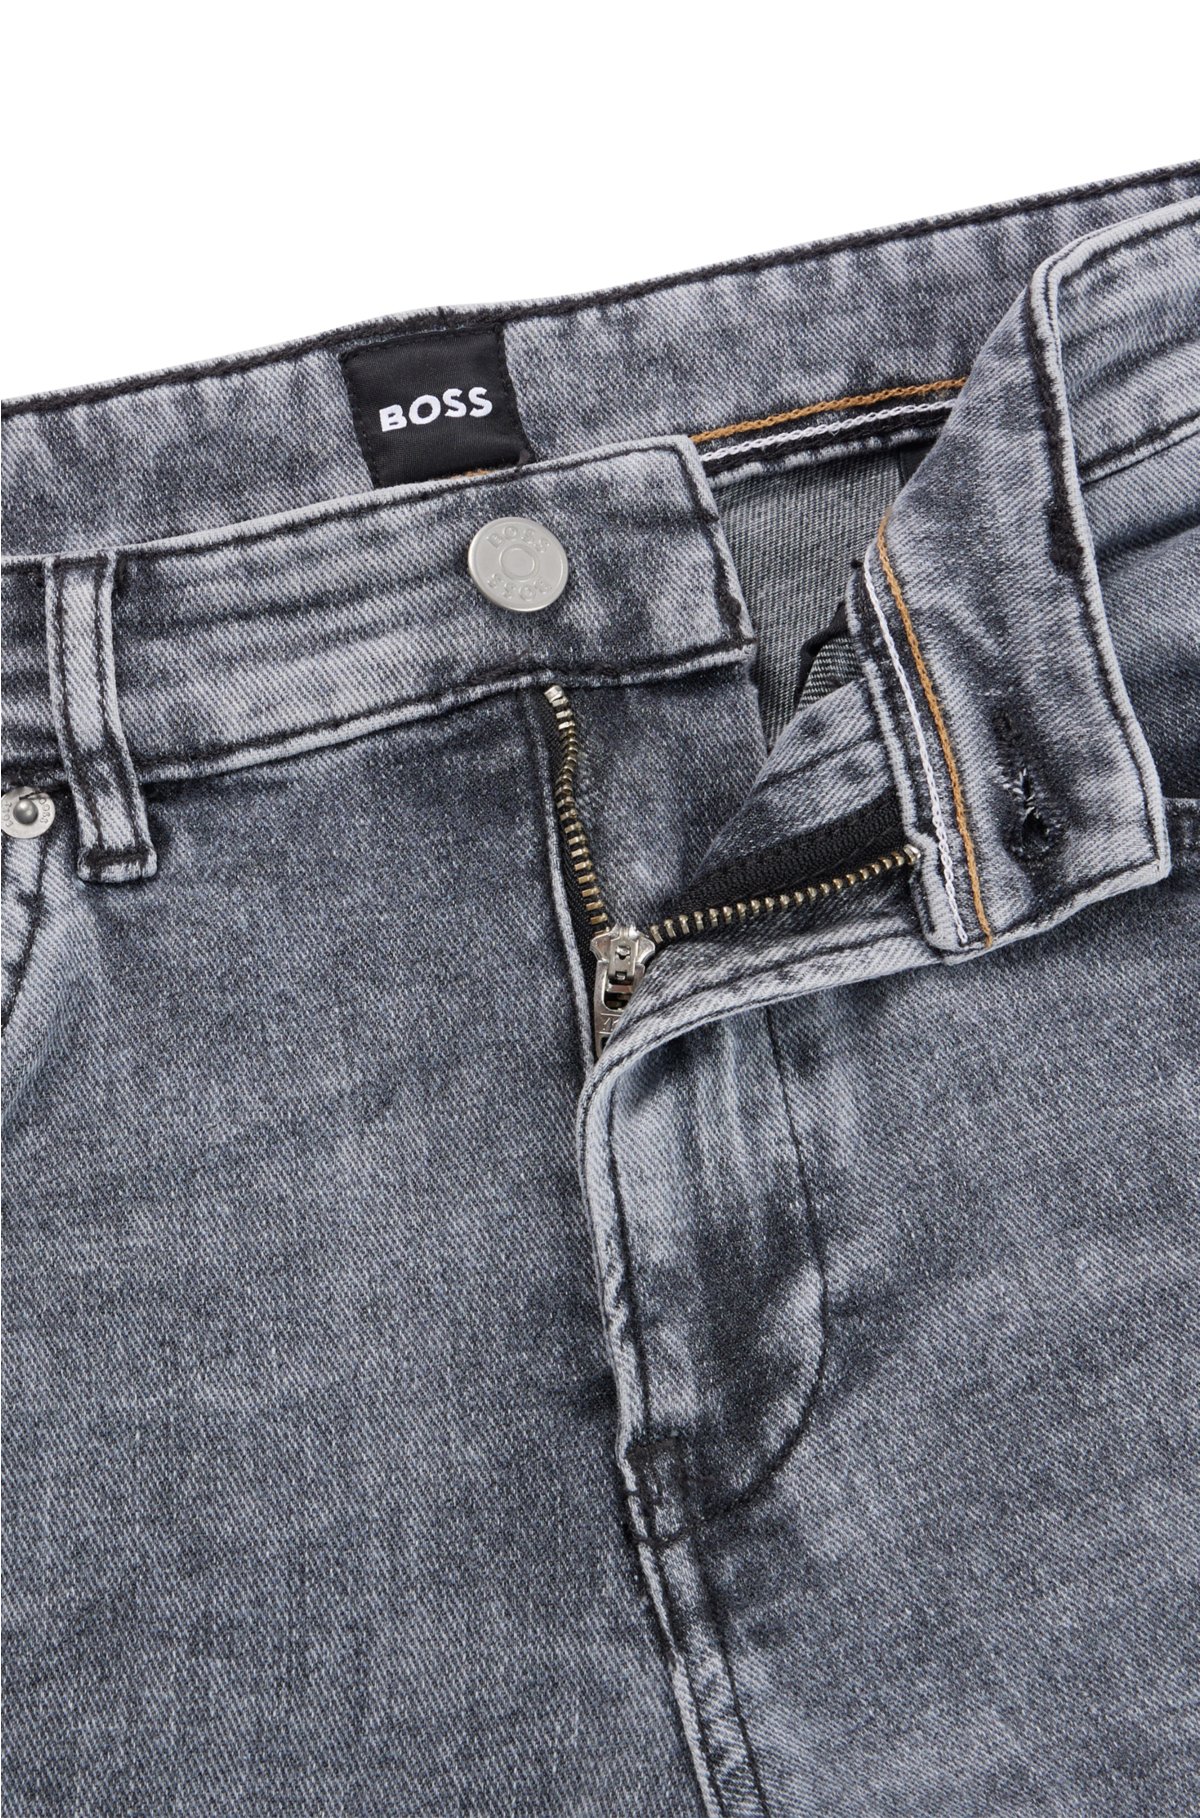 excitation R kravle BOSS - Slim-fit jeans in stonewashed grey Italian stretch denim